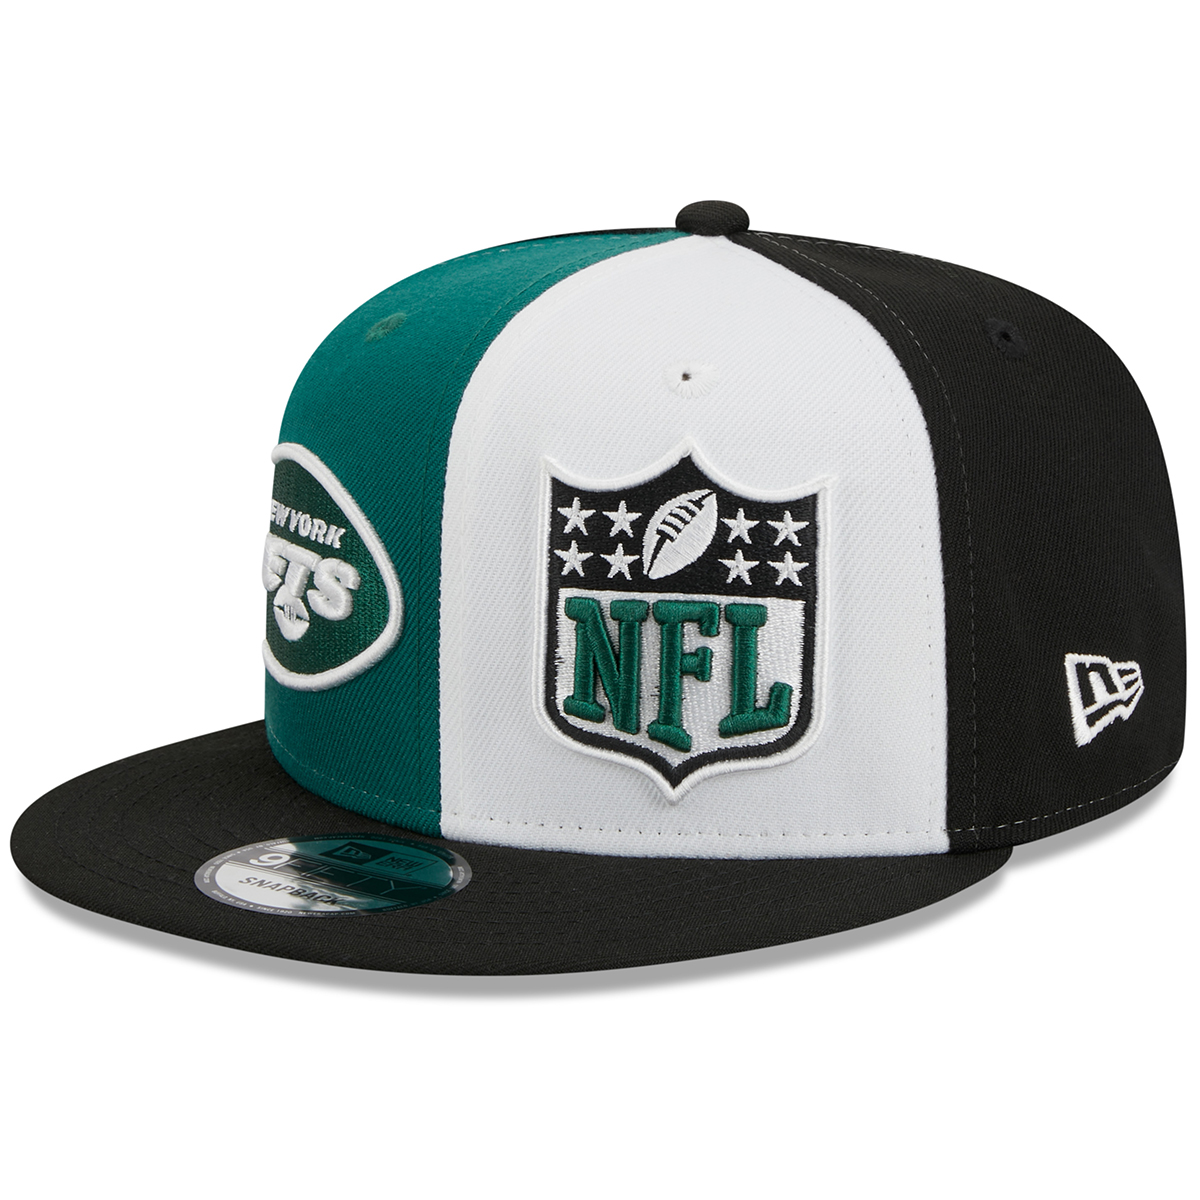 New York Jets Men's New Era 9Fifty Snapback Adjustable Hat